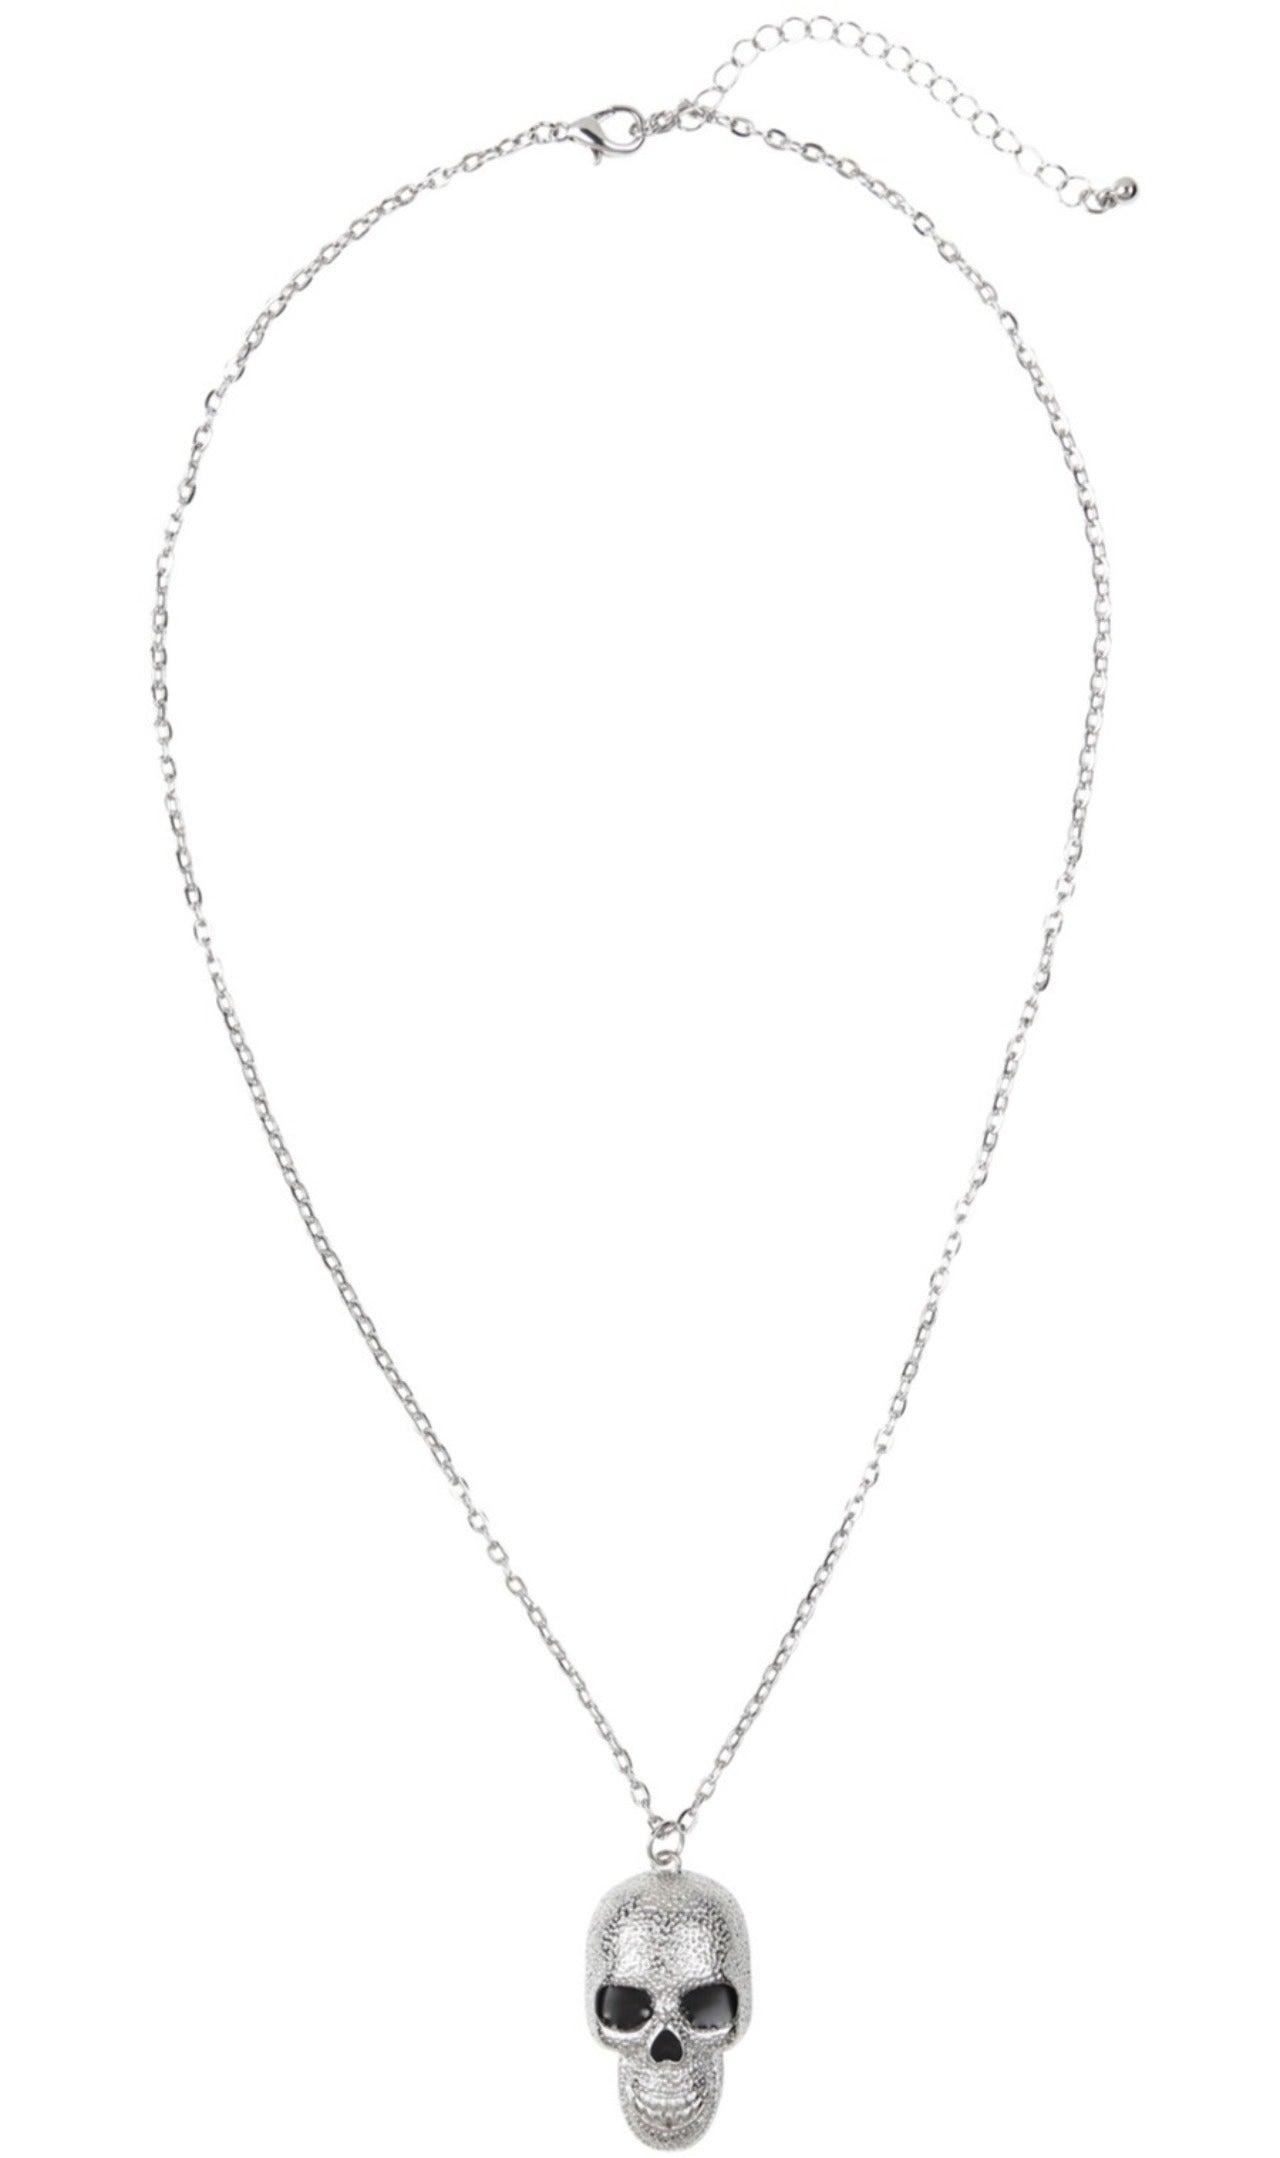 Silberne Totenkopf-Halskette